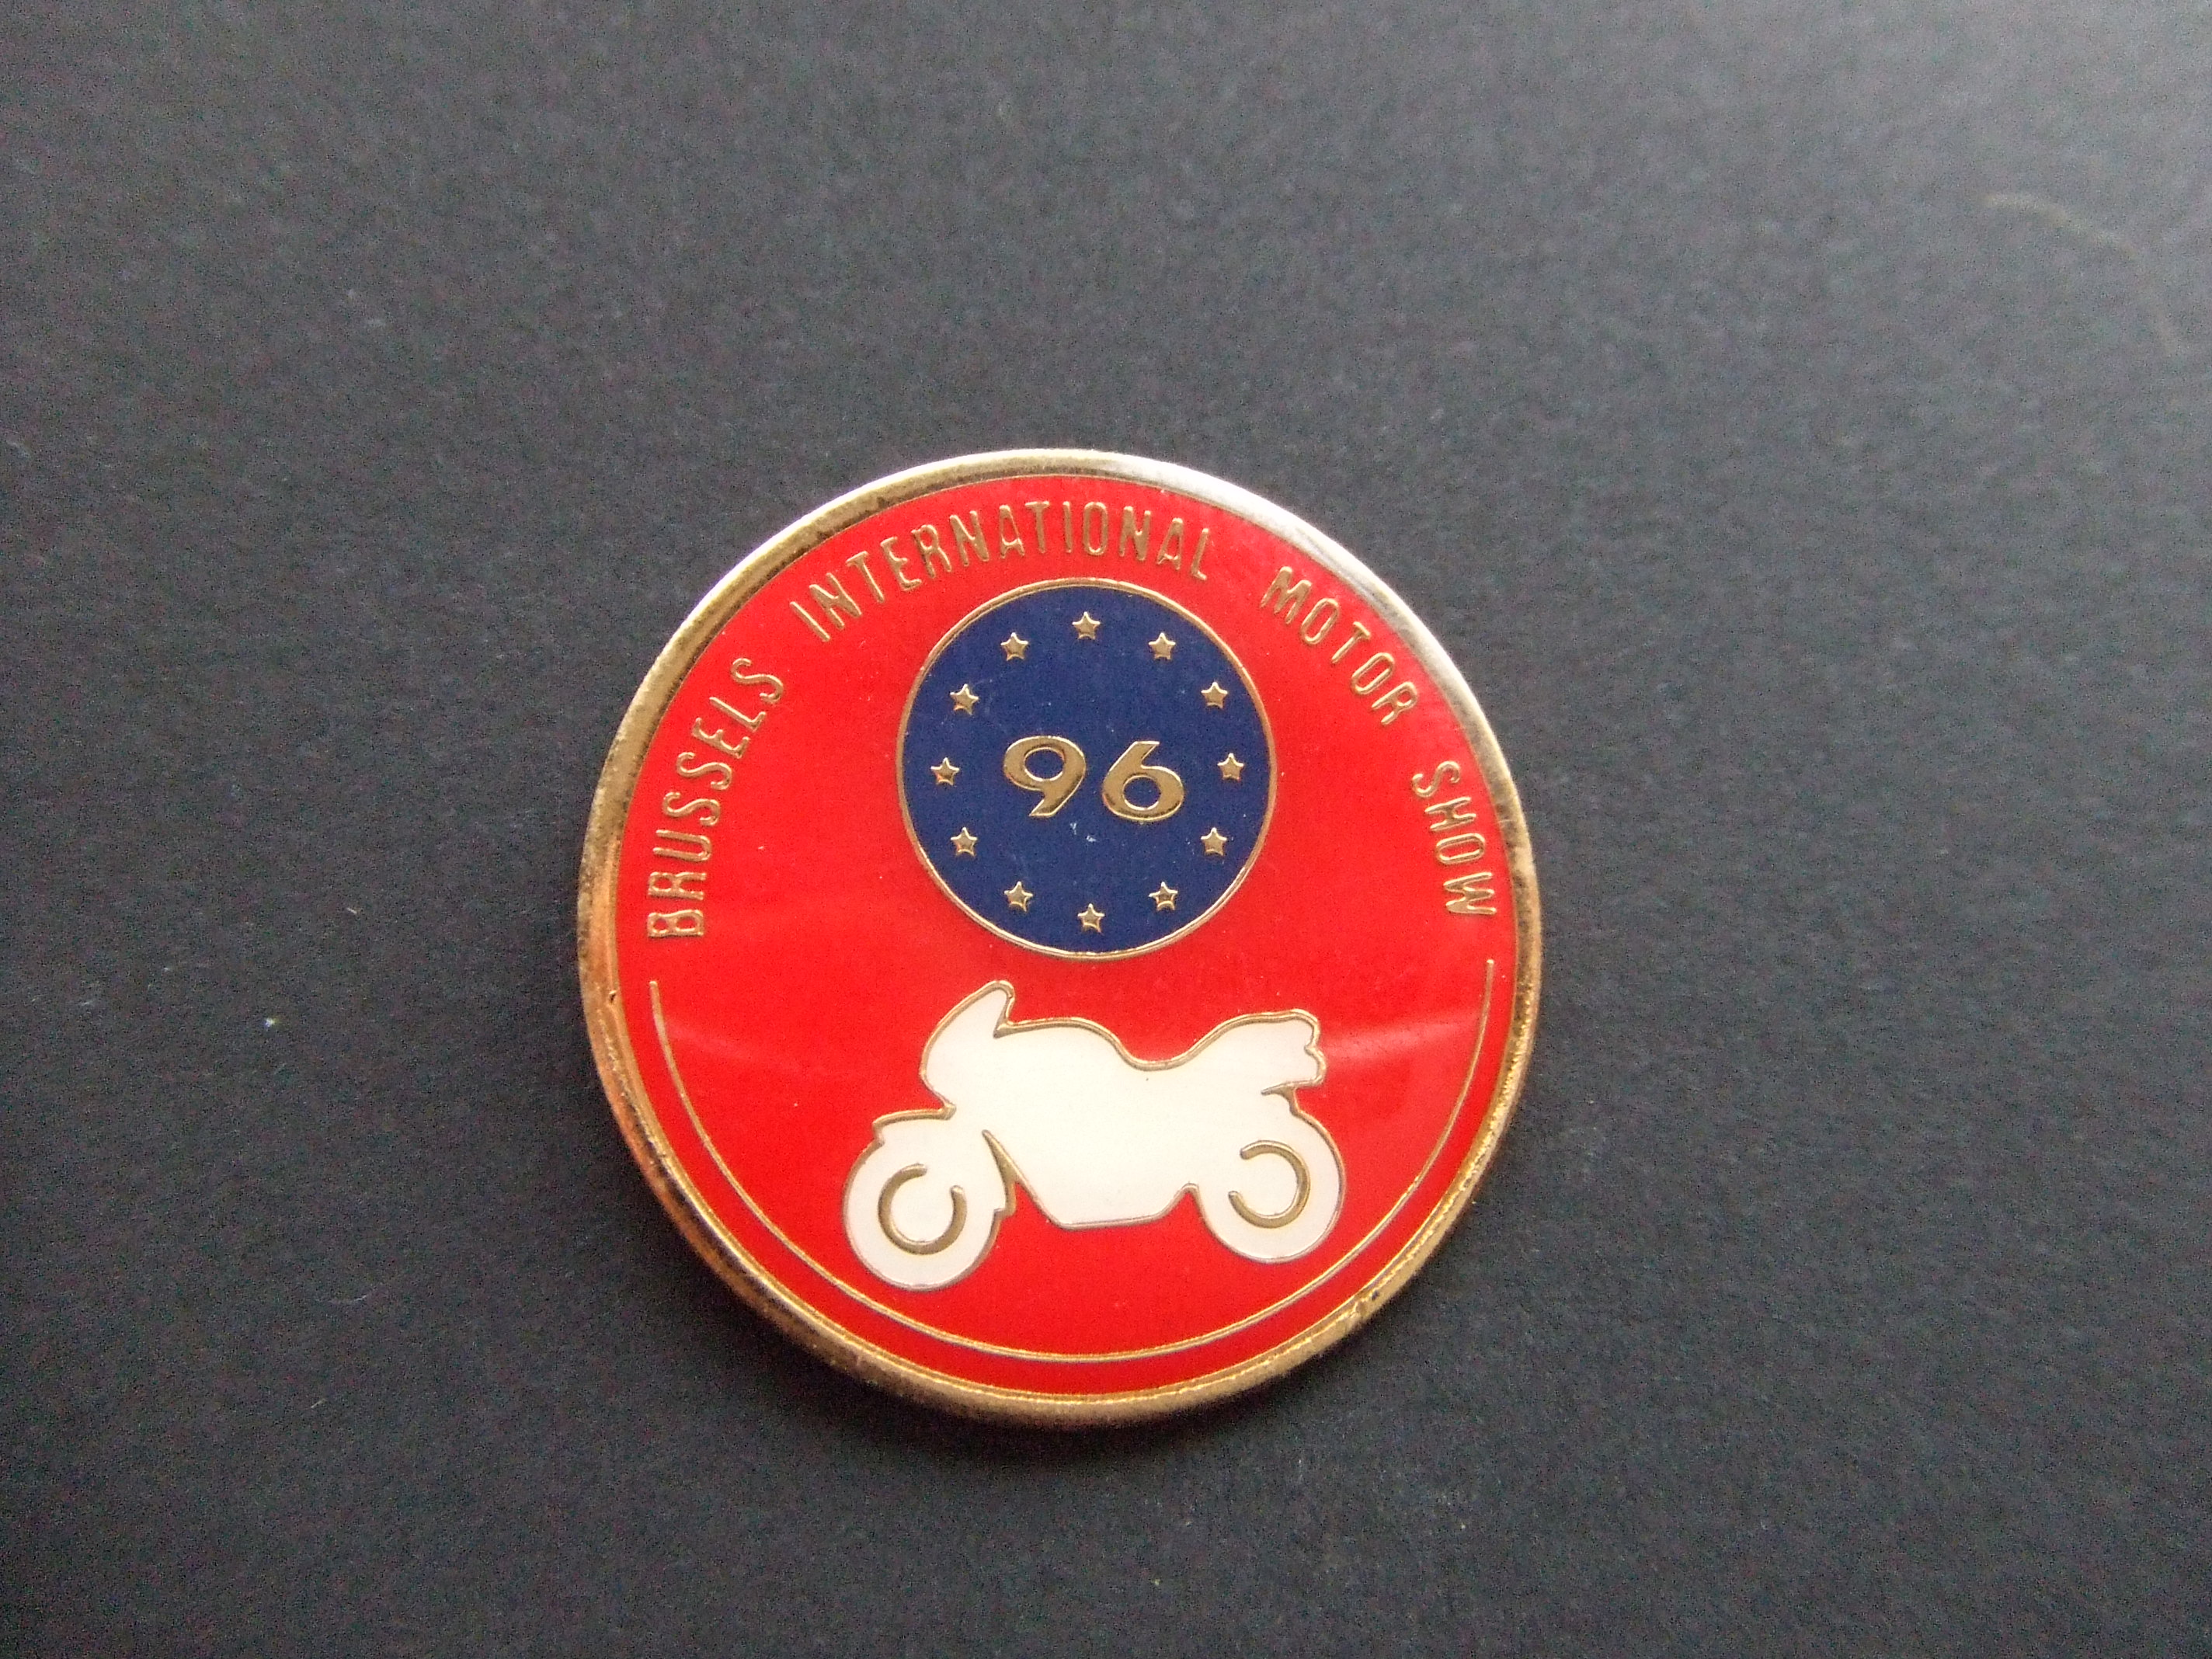 Brussels internationale motor show 1996